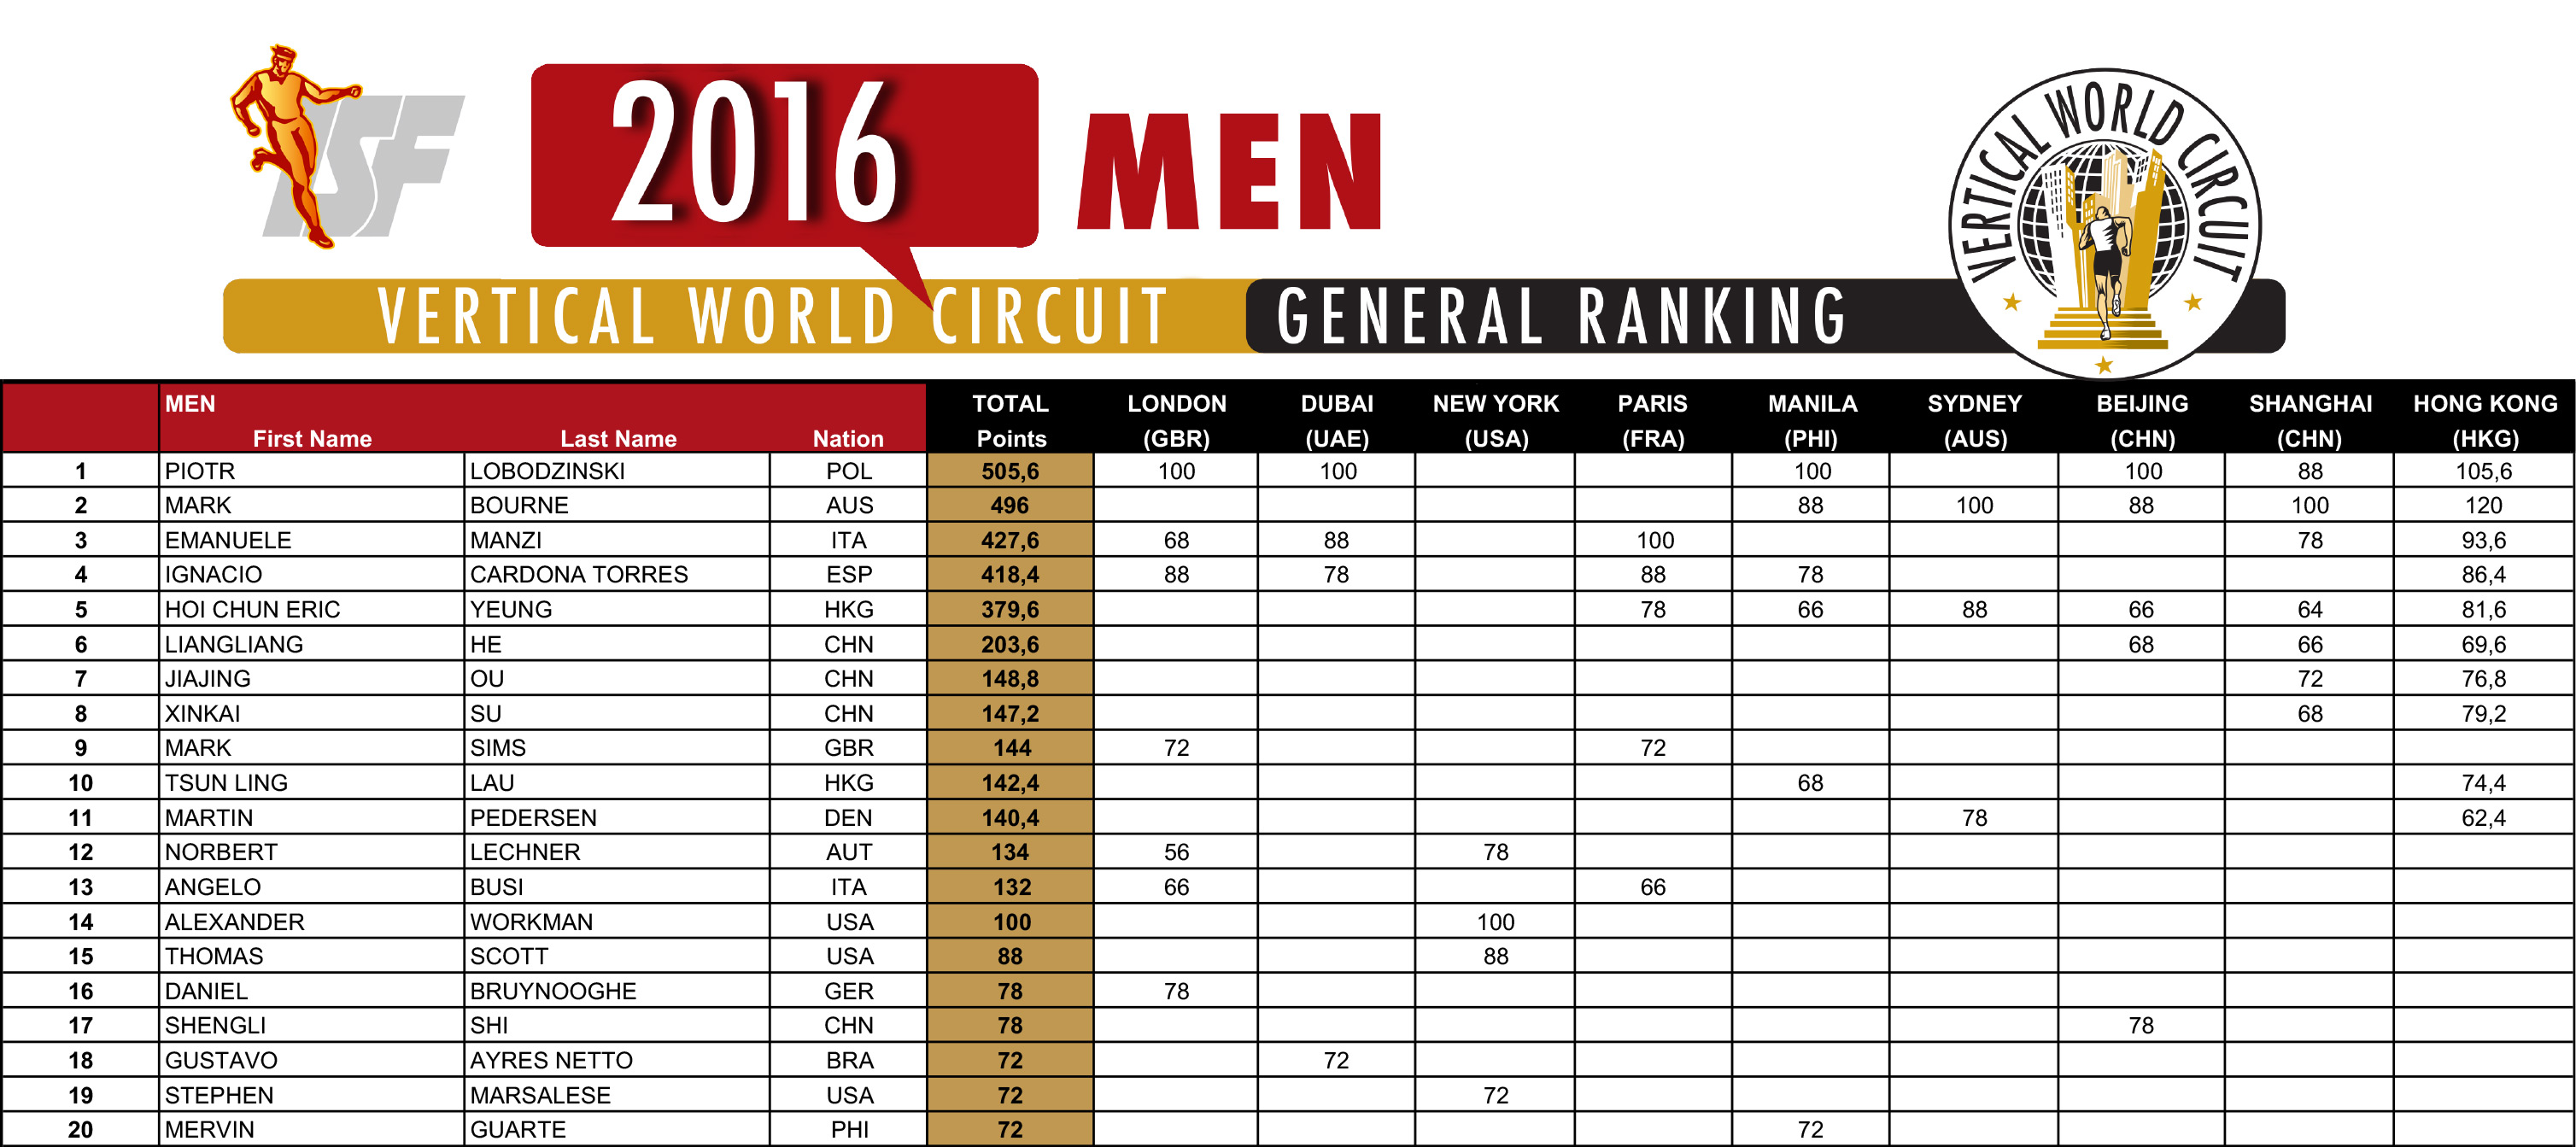 2016-vwc-ranking_men-04-12